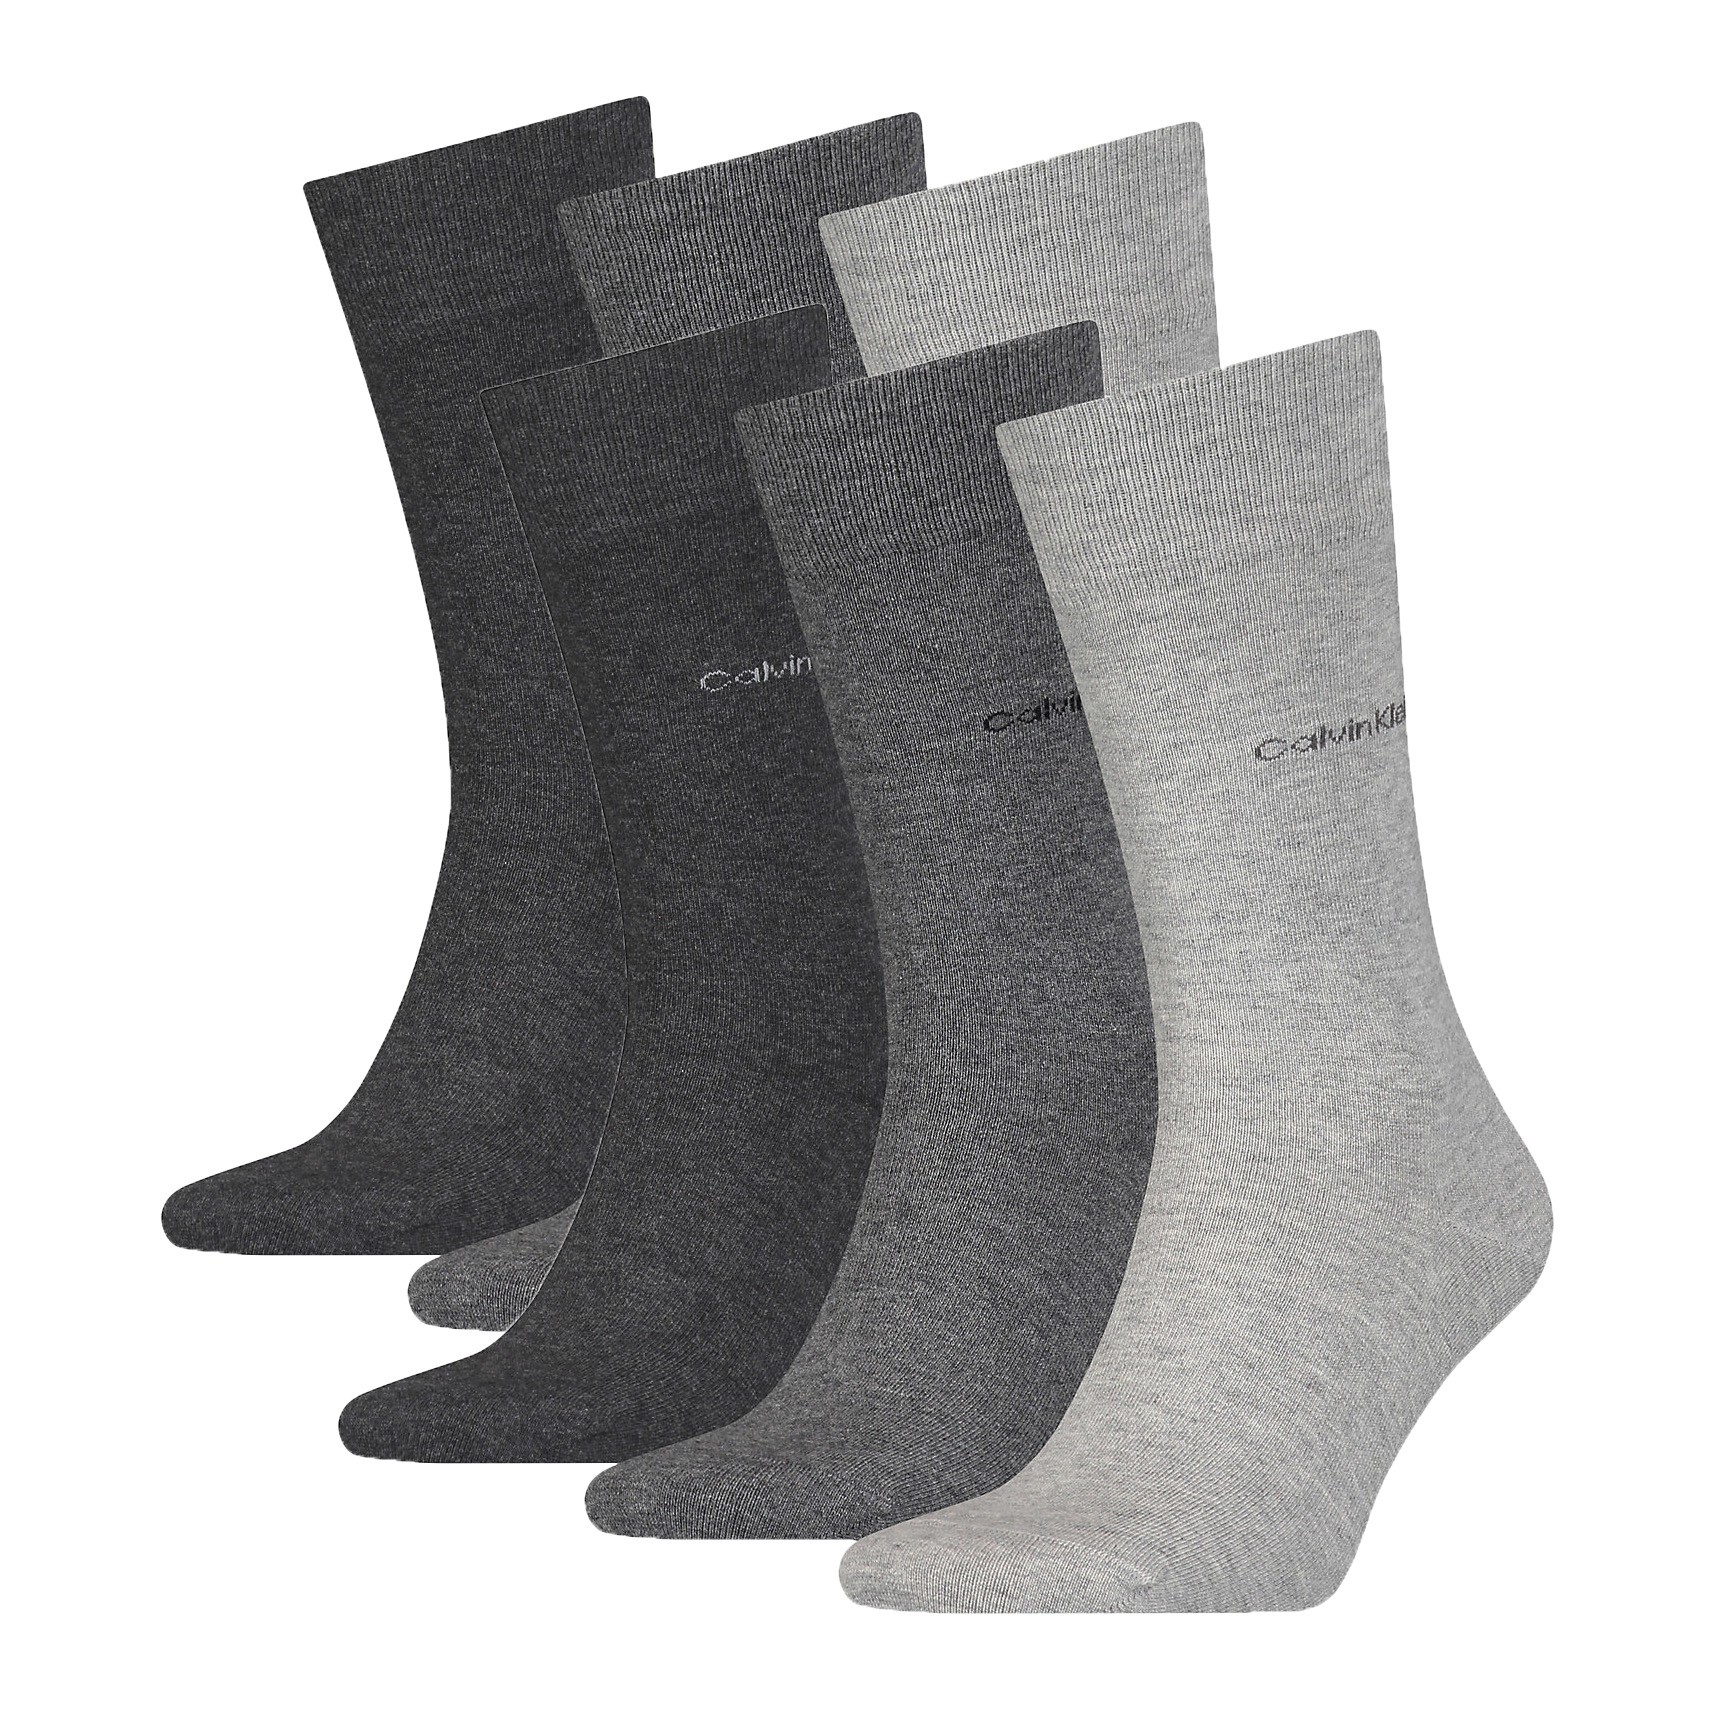 Set of 3 pairs of Calvin Klein - grey socks: Packs for man brand Ca